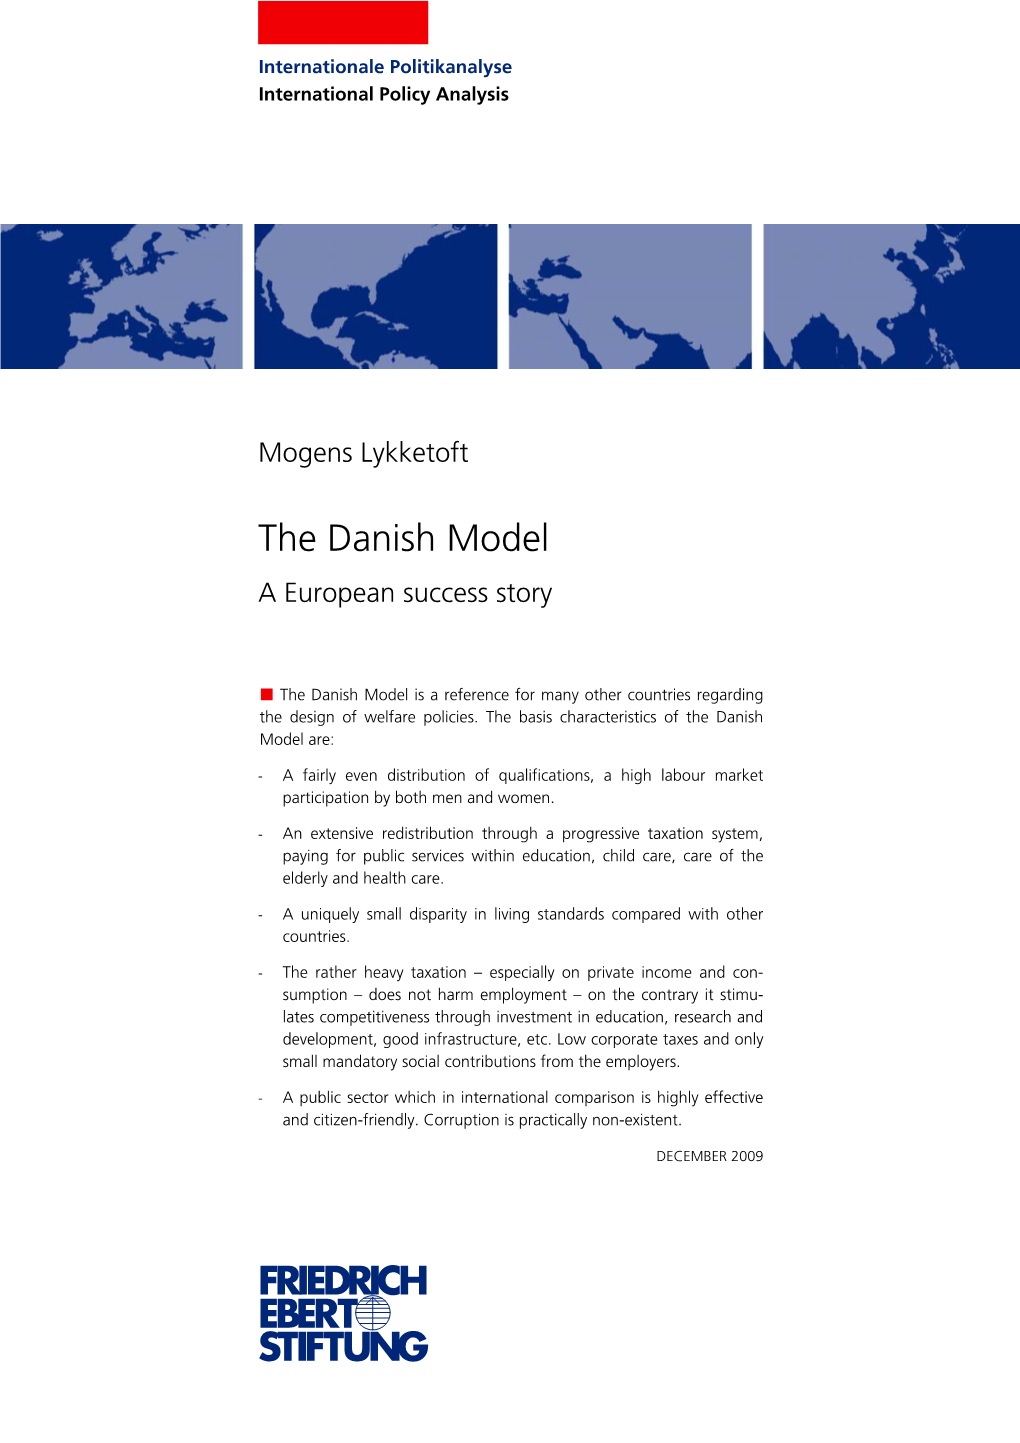 The Danish Model a European Success Story